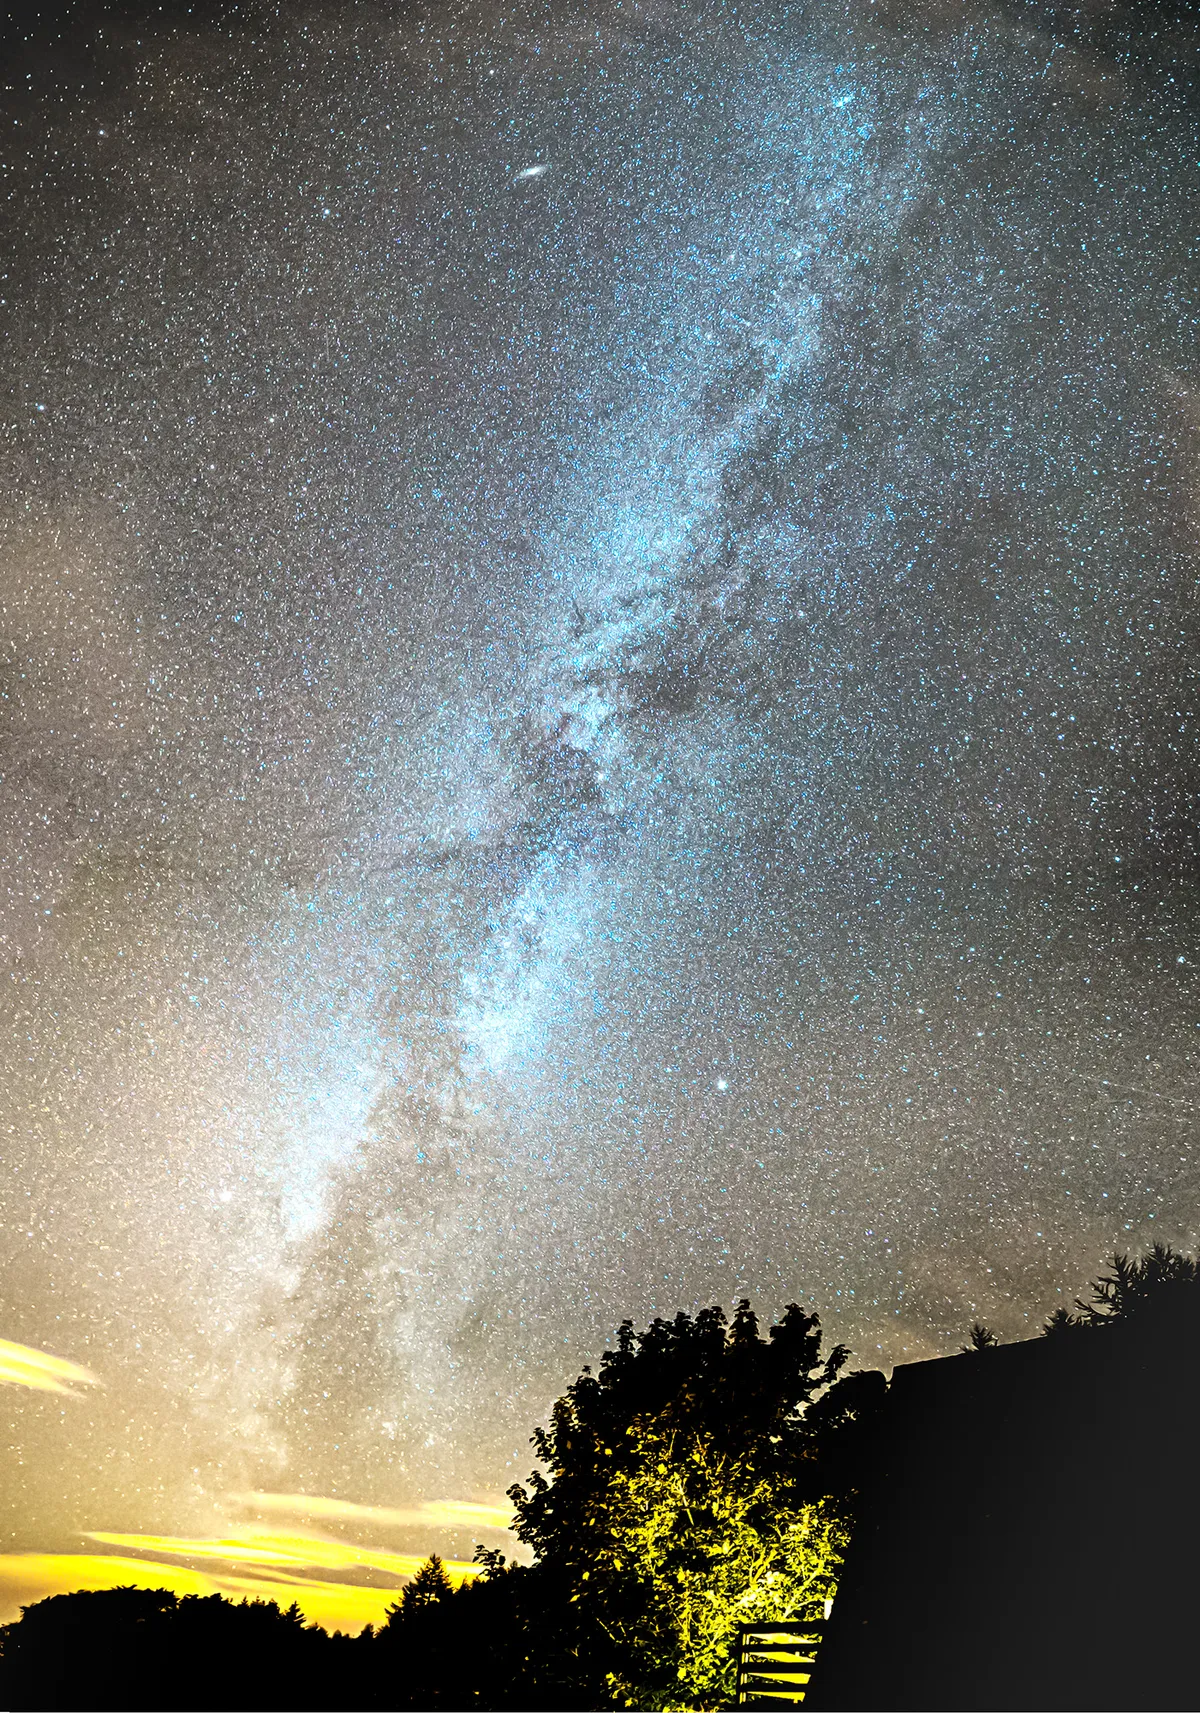 The Milky Way at Sunset by John Short, Moray Firth, Scotland, UK. Equipment: Sony A7s, Samyang 14mmm.